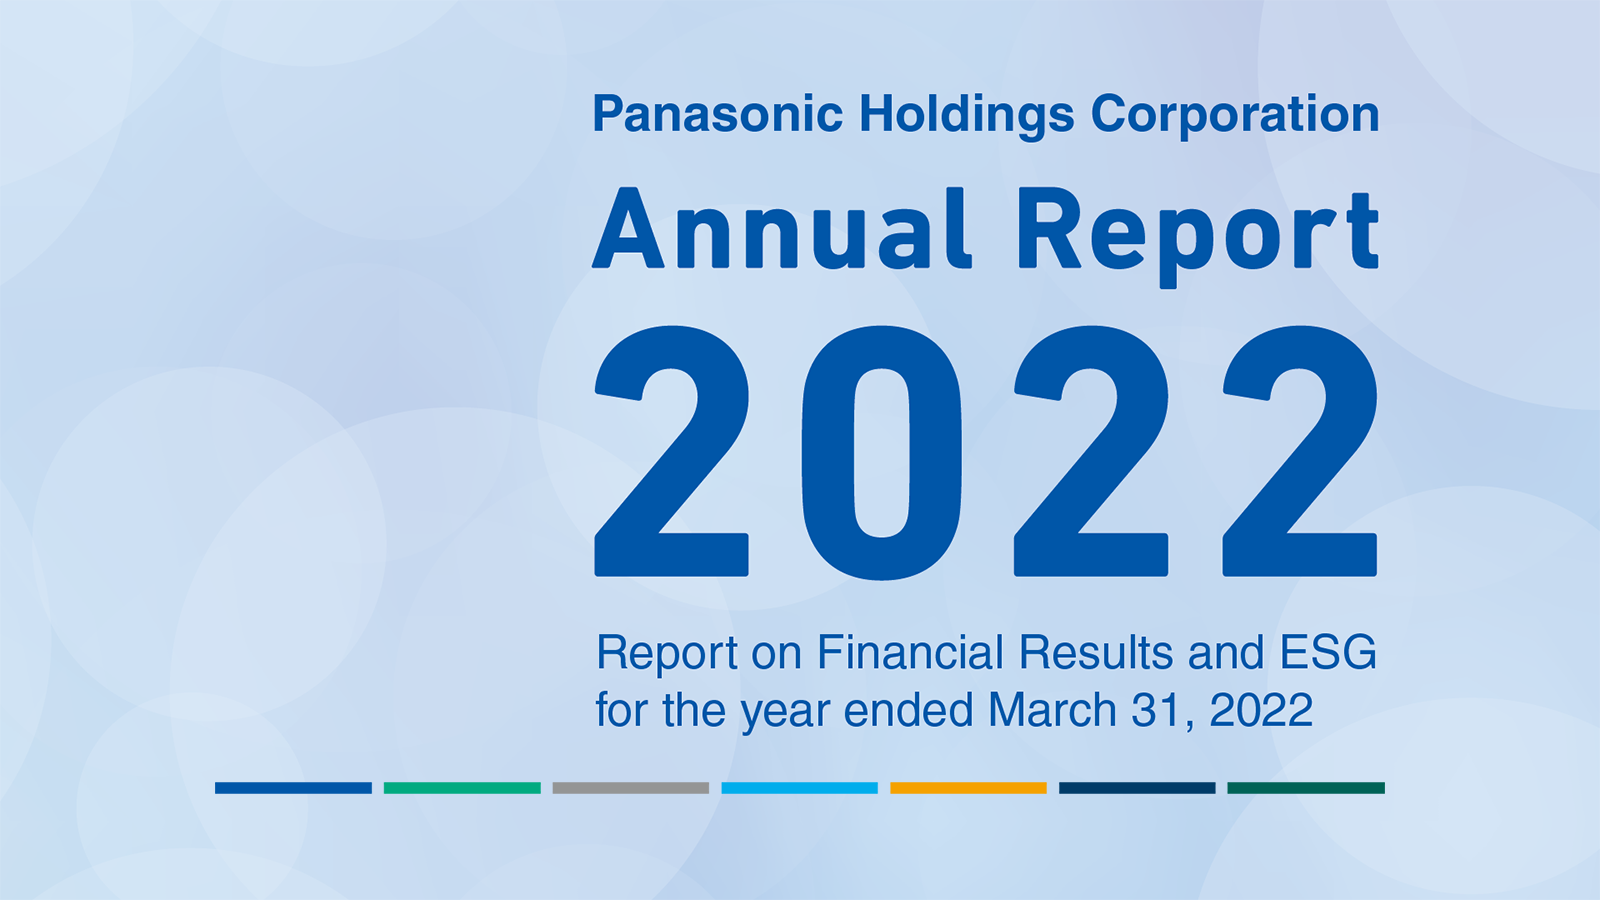 Image: Annual Report 2022 of Panasonic Holdings